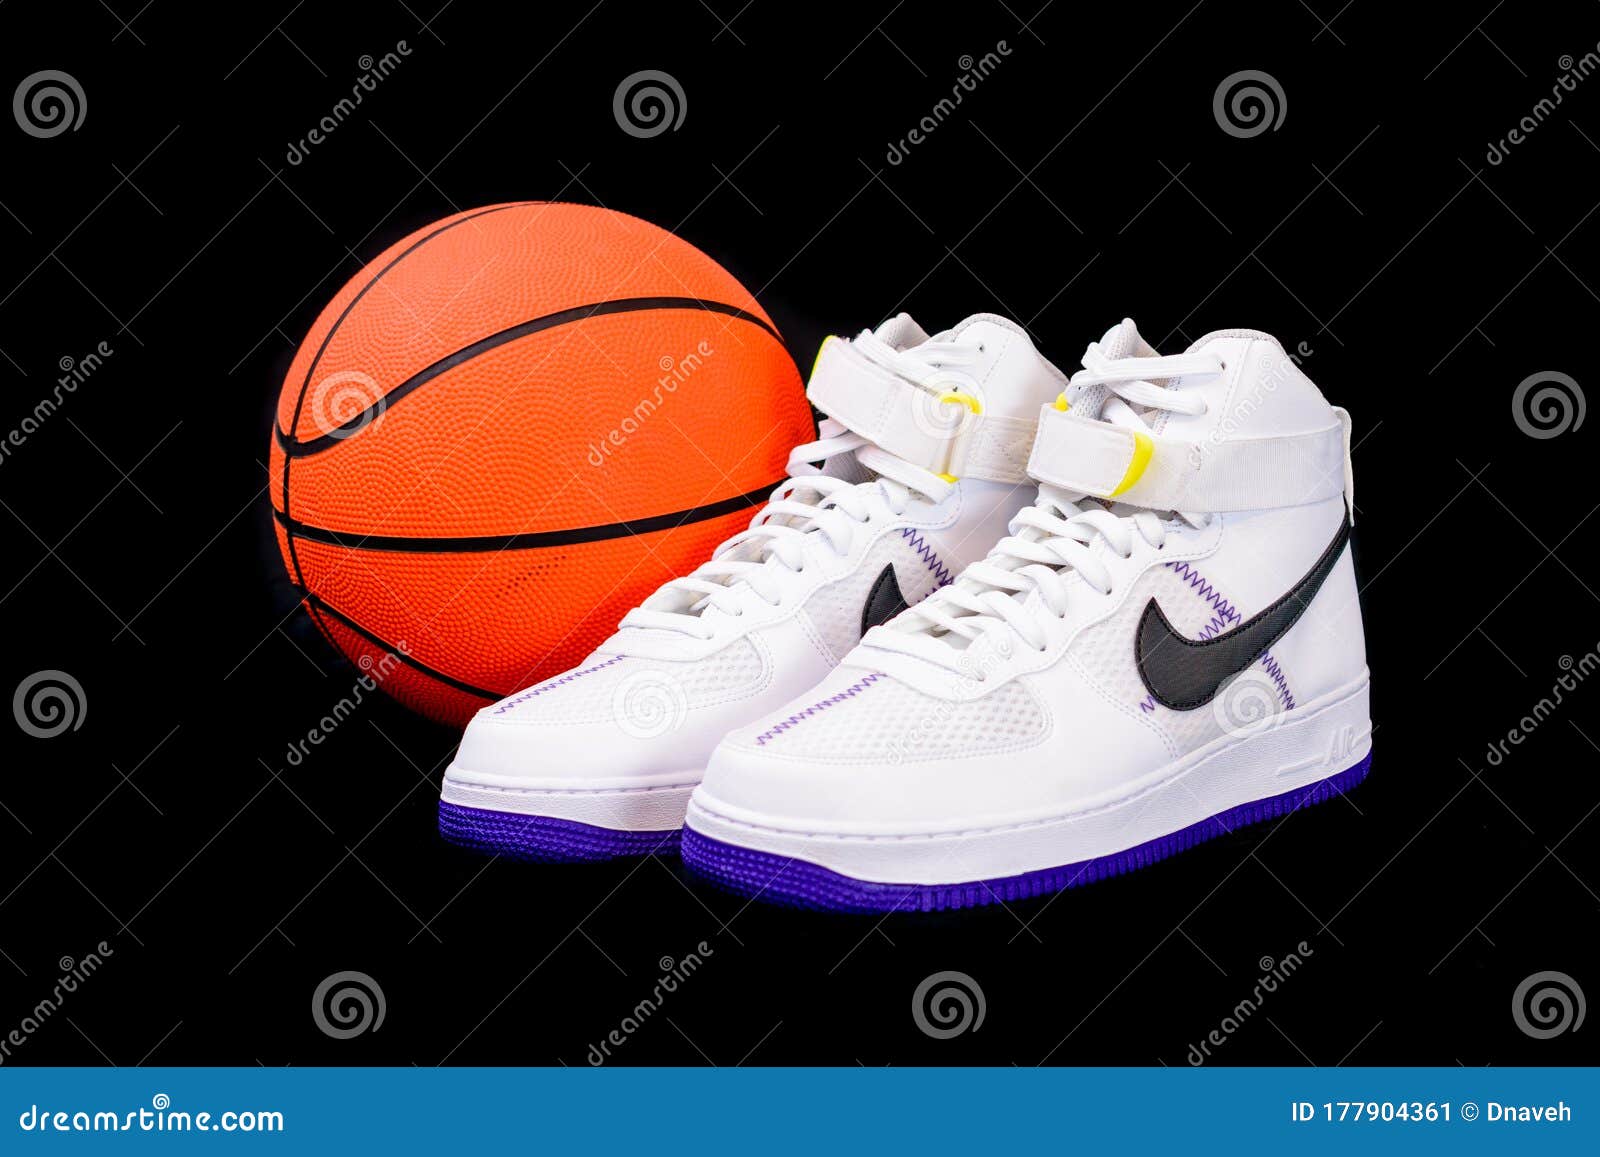 Nike Air Force 1 Zapatillas De Baloncesto Alta Gama editorial - de zapatos, juego: